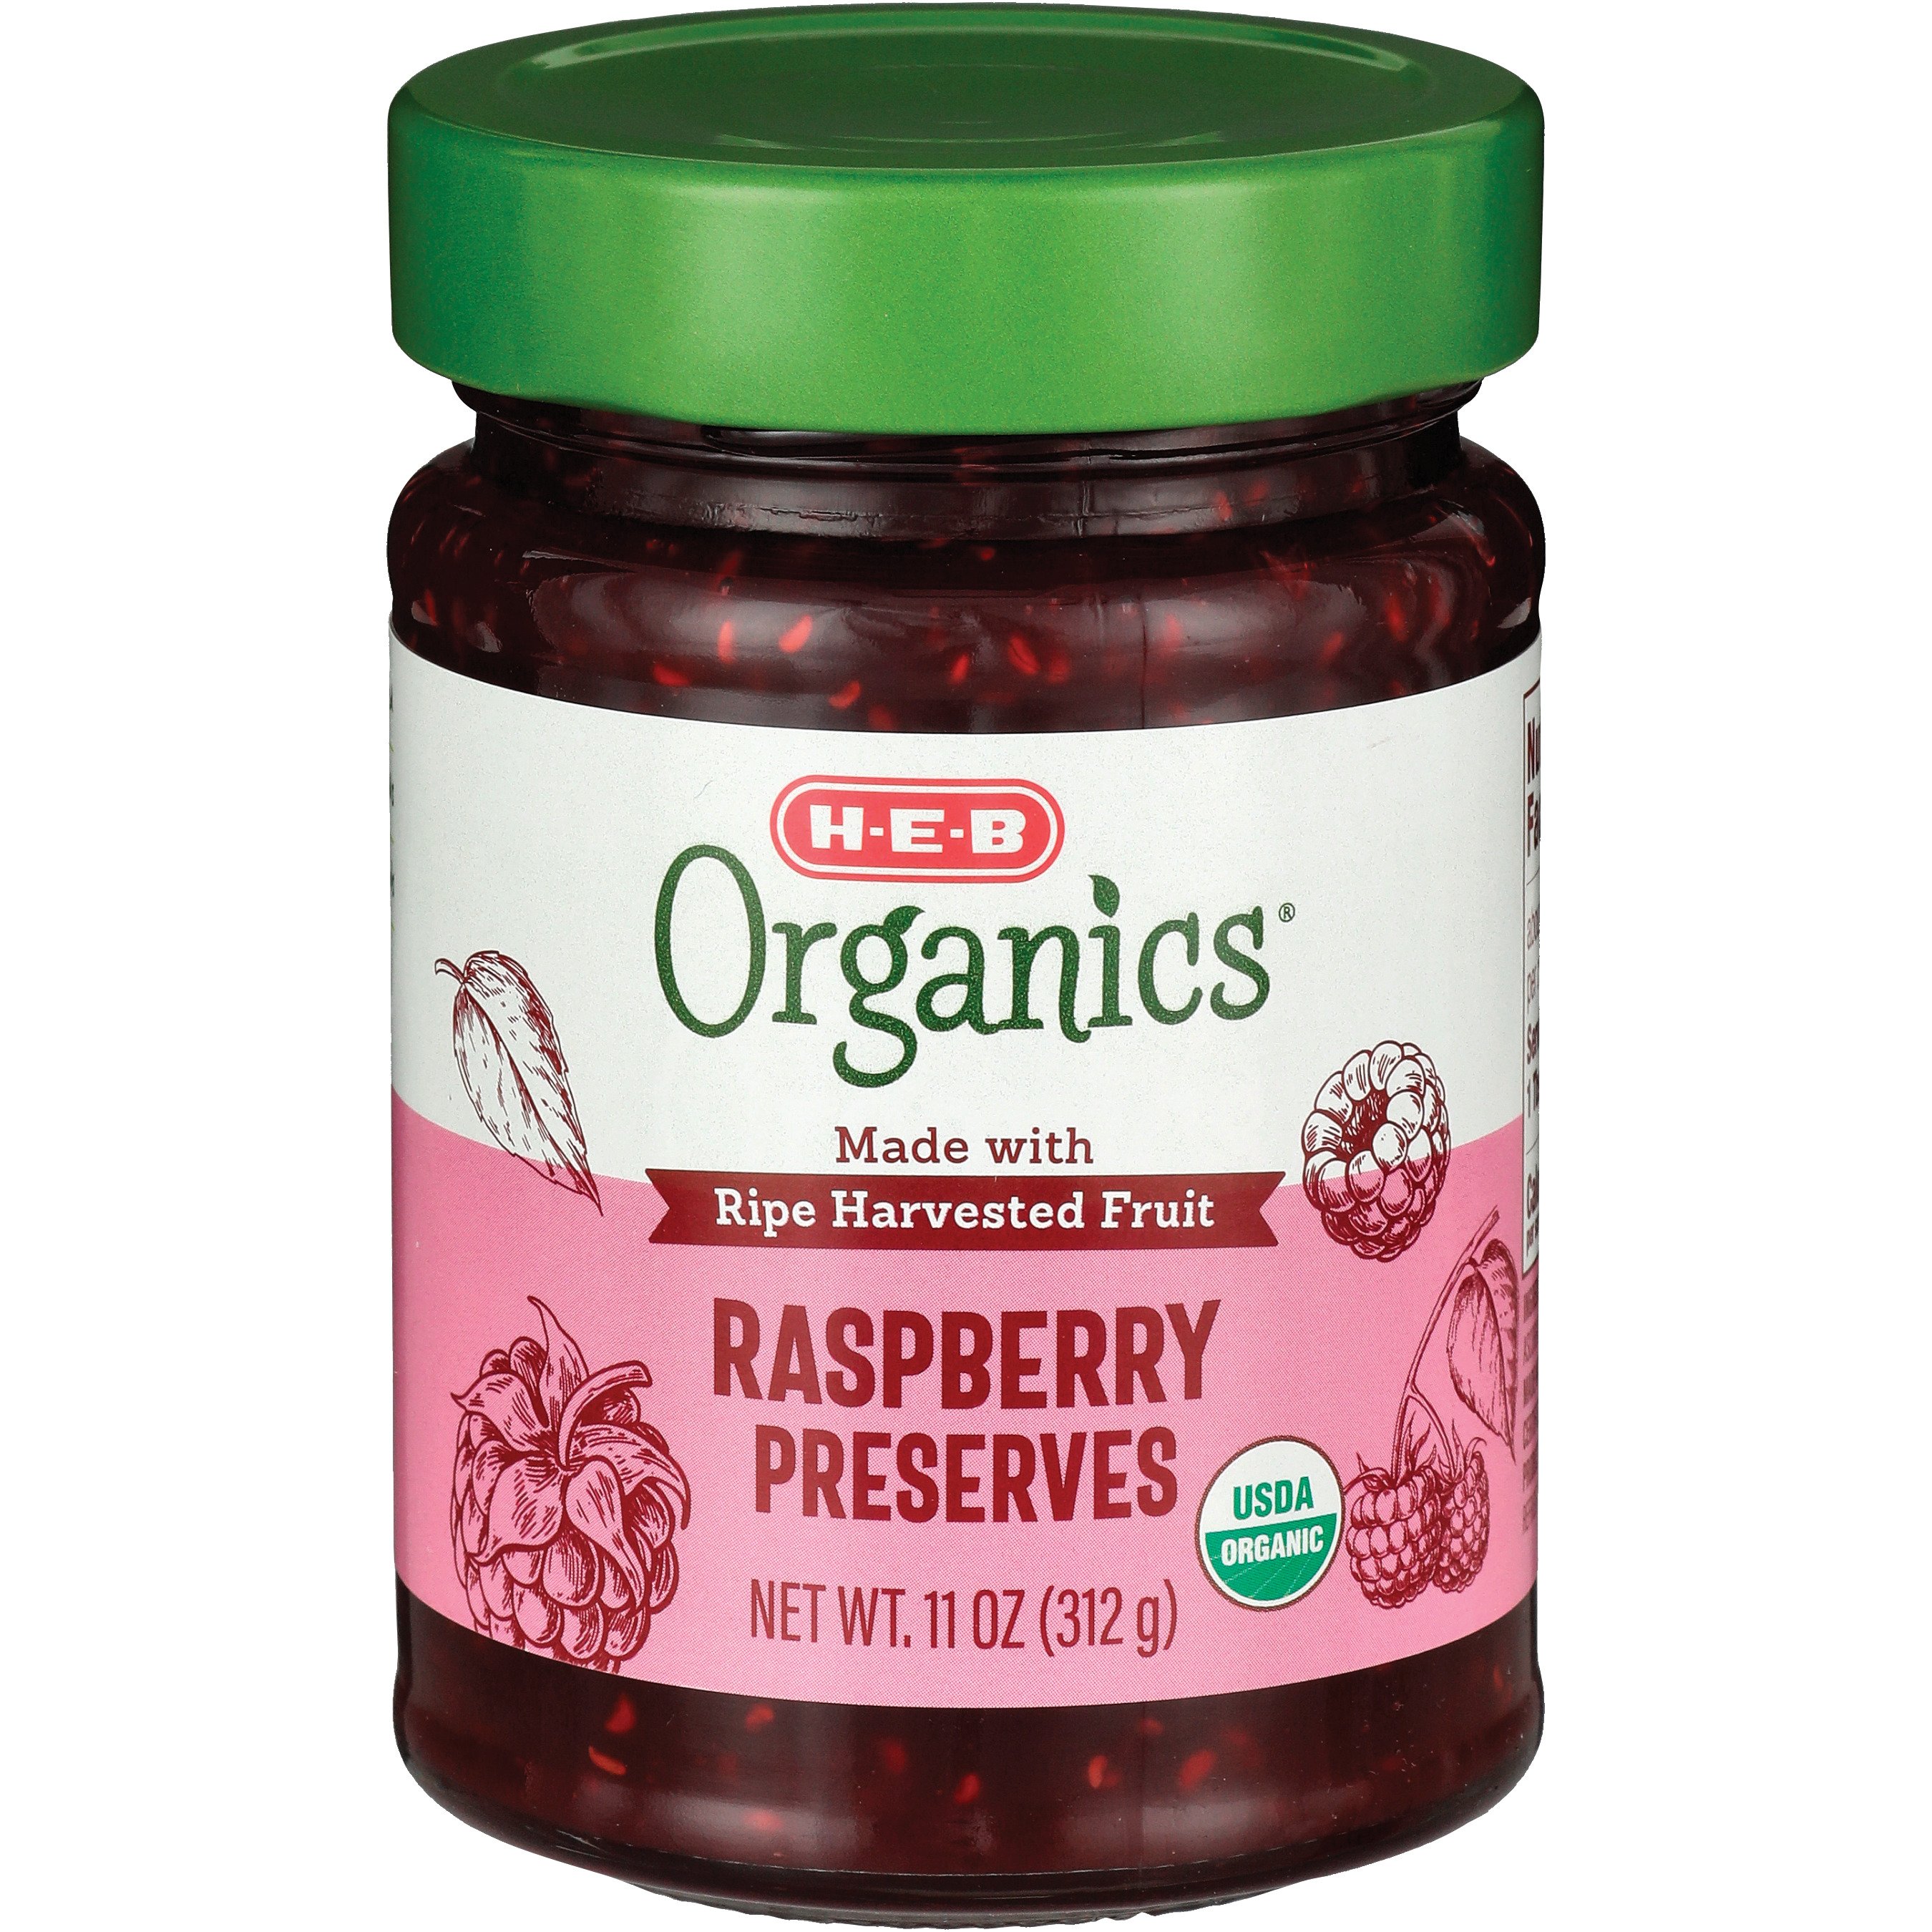 H-E-B Organics Raspberry Preserves - Shop Jelly & Jam at H-E-B